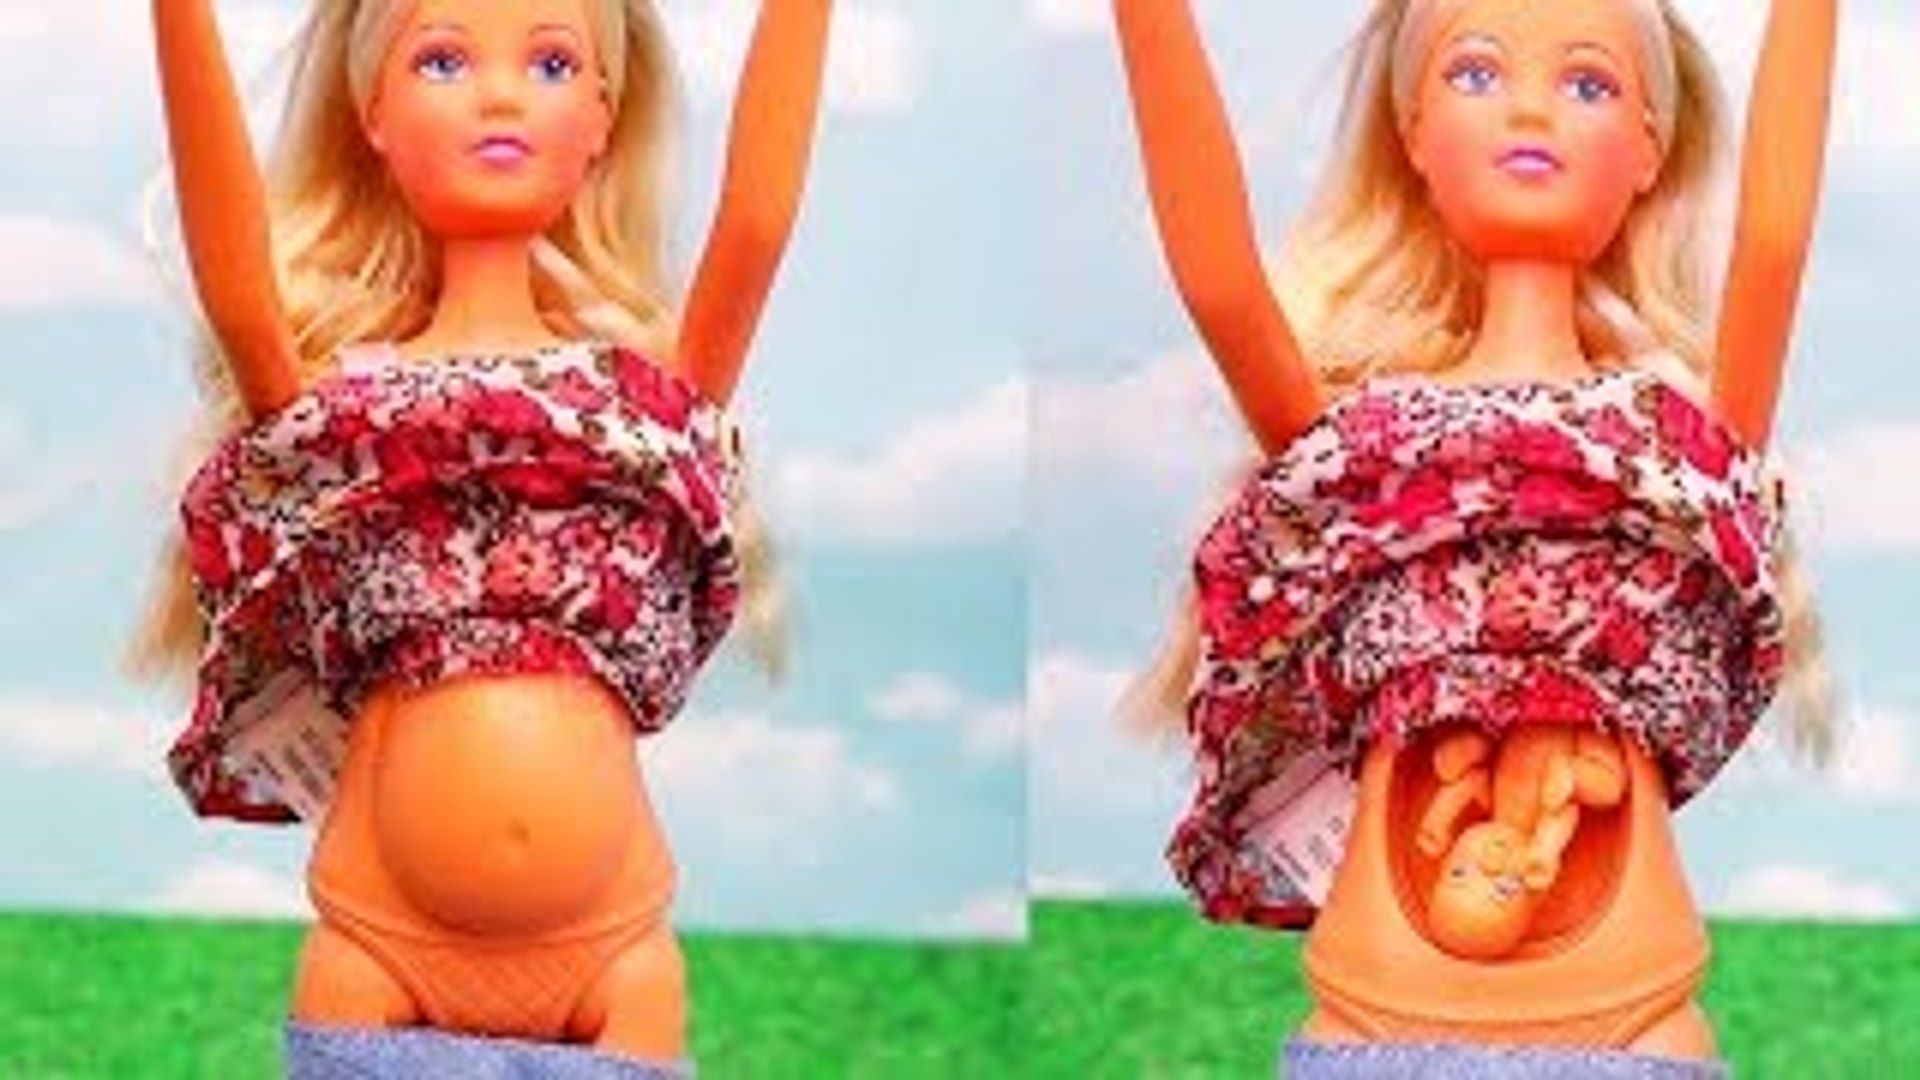 Barbie gravida anos 80 #barbie @Barbie #mattel @Mattel doll pregnant 